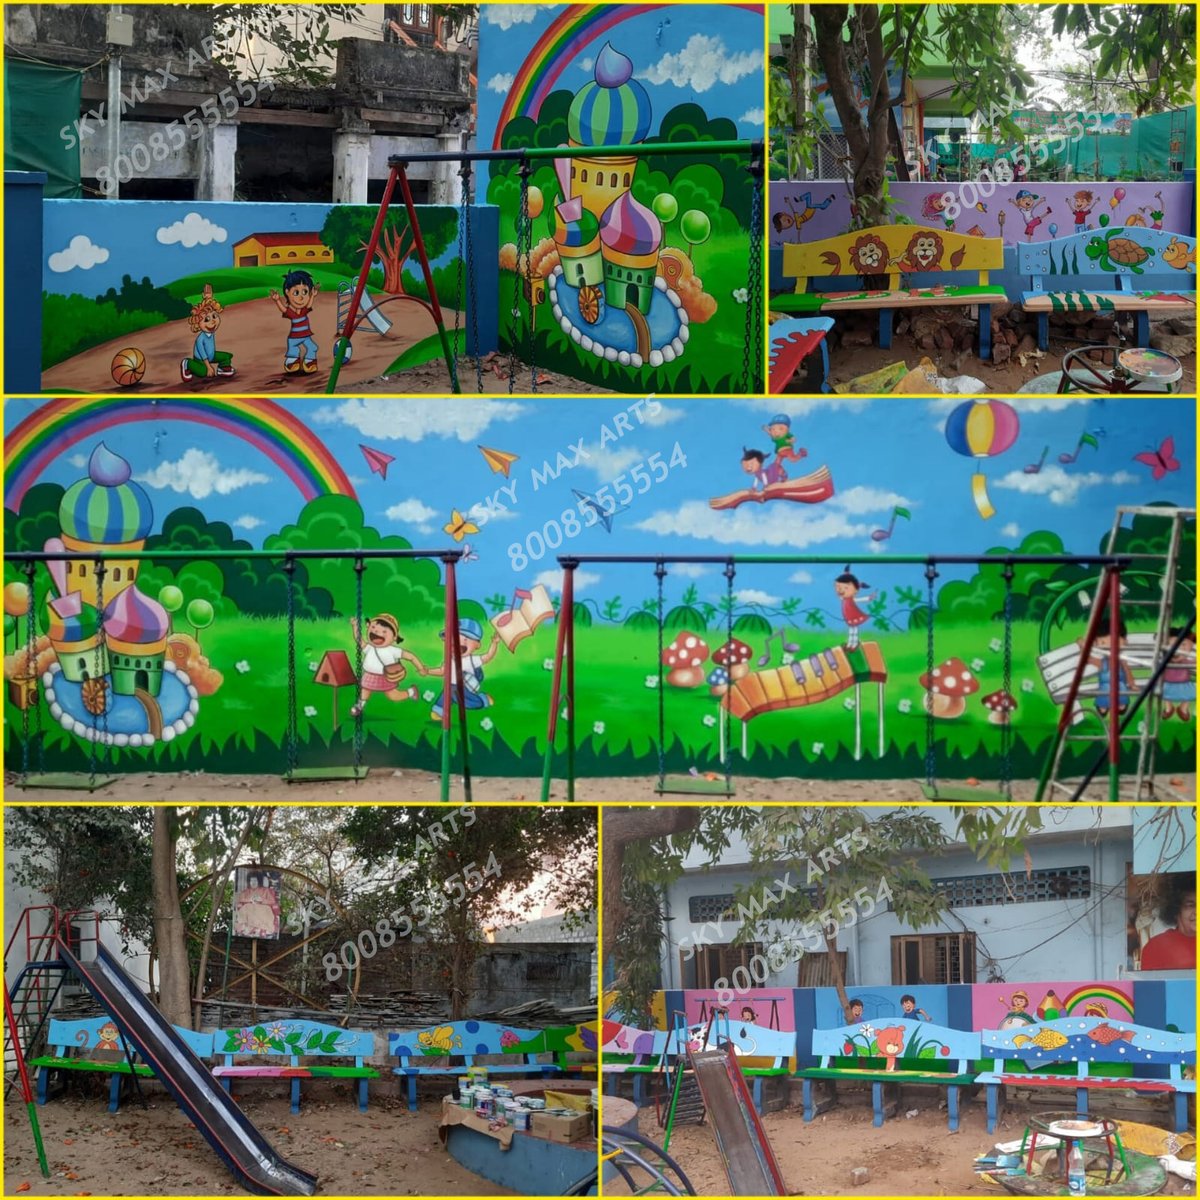 School Compound Wall Cartoon Wall Painting Images From Sri Balaji Vidhyalayam Machilipatnam
#kidspreschoolwallpaintingimages
#wallpaintingideasforschool
#nurseryschoolwalldesign
#wallpaintingforplayschool
#cartoonpainting

8008555554
04040033355
skymaxarts.com